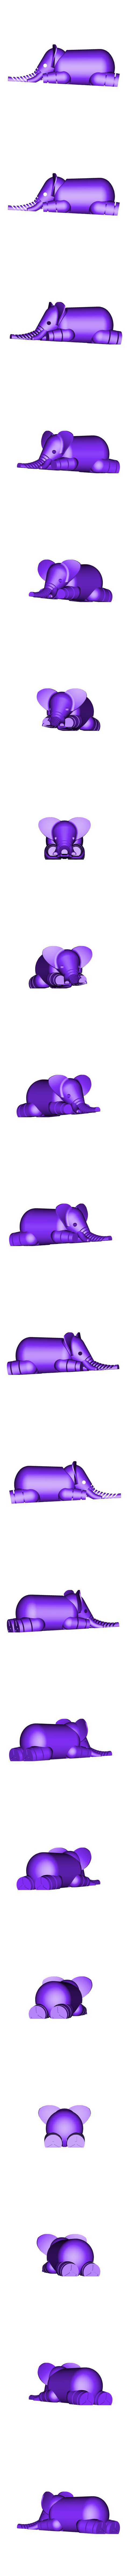 LFS_Elephant_Geant.stl Download free STL file Elephant • 3D printer design, leFabShop